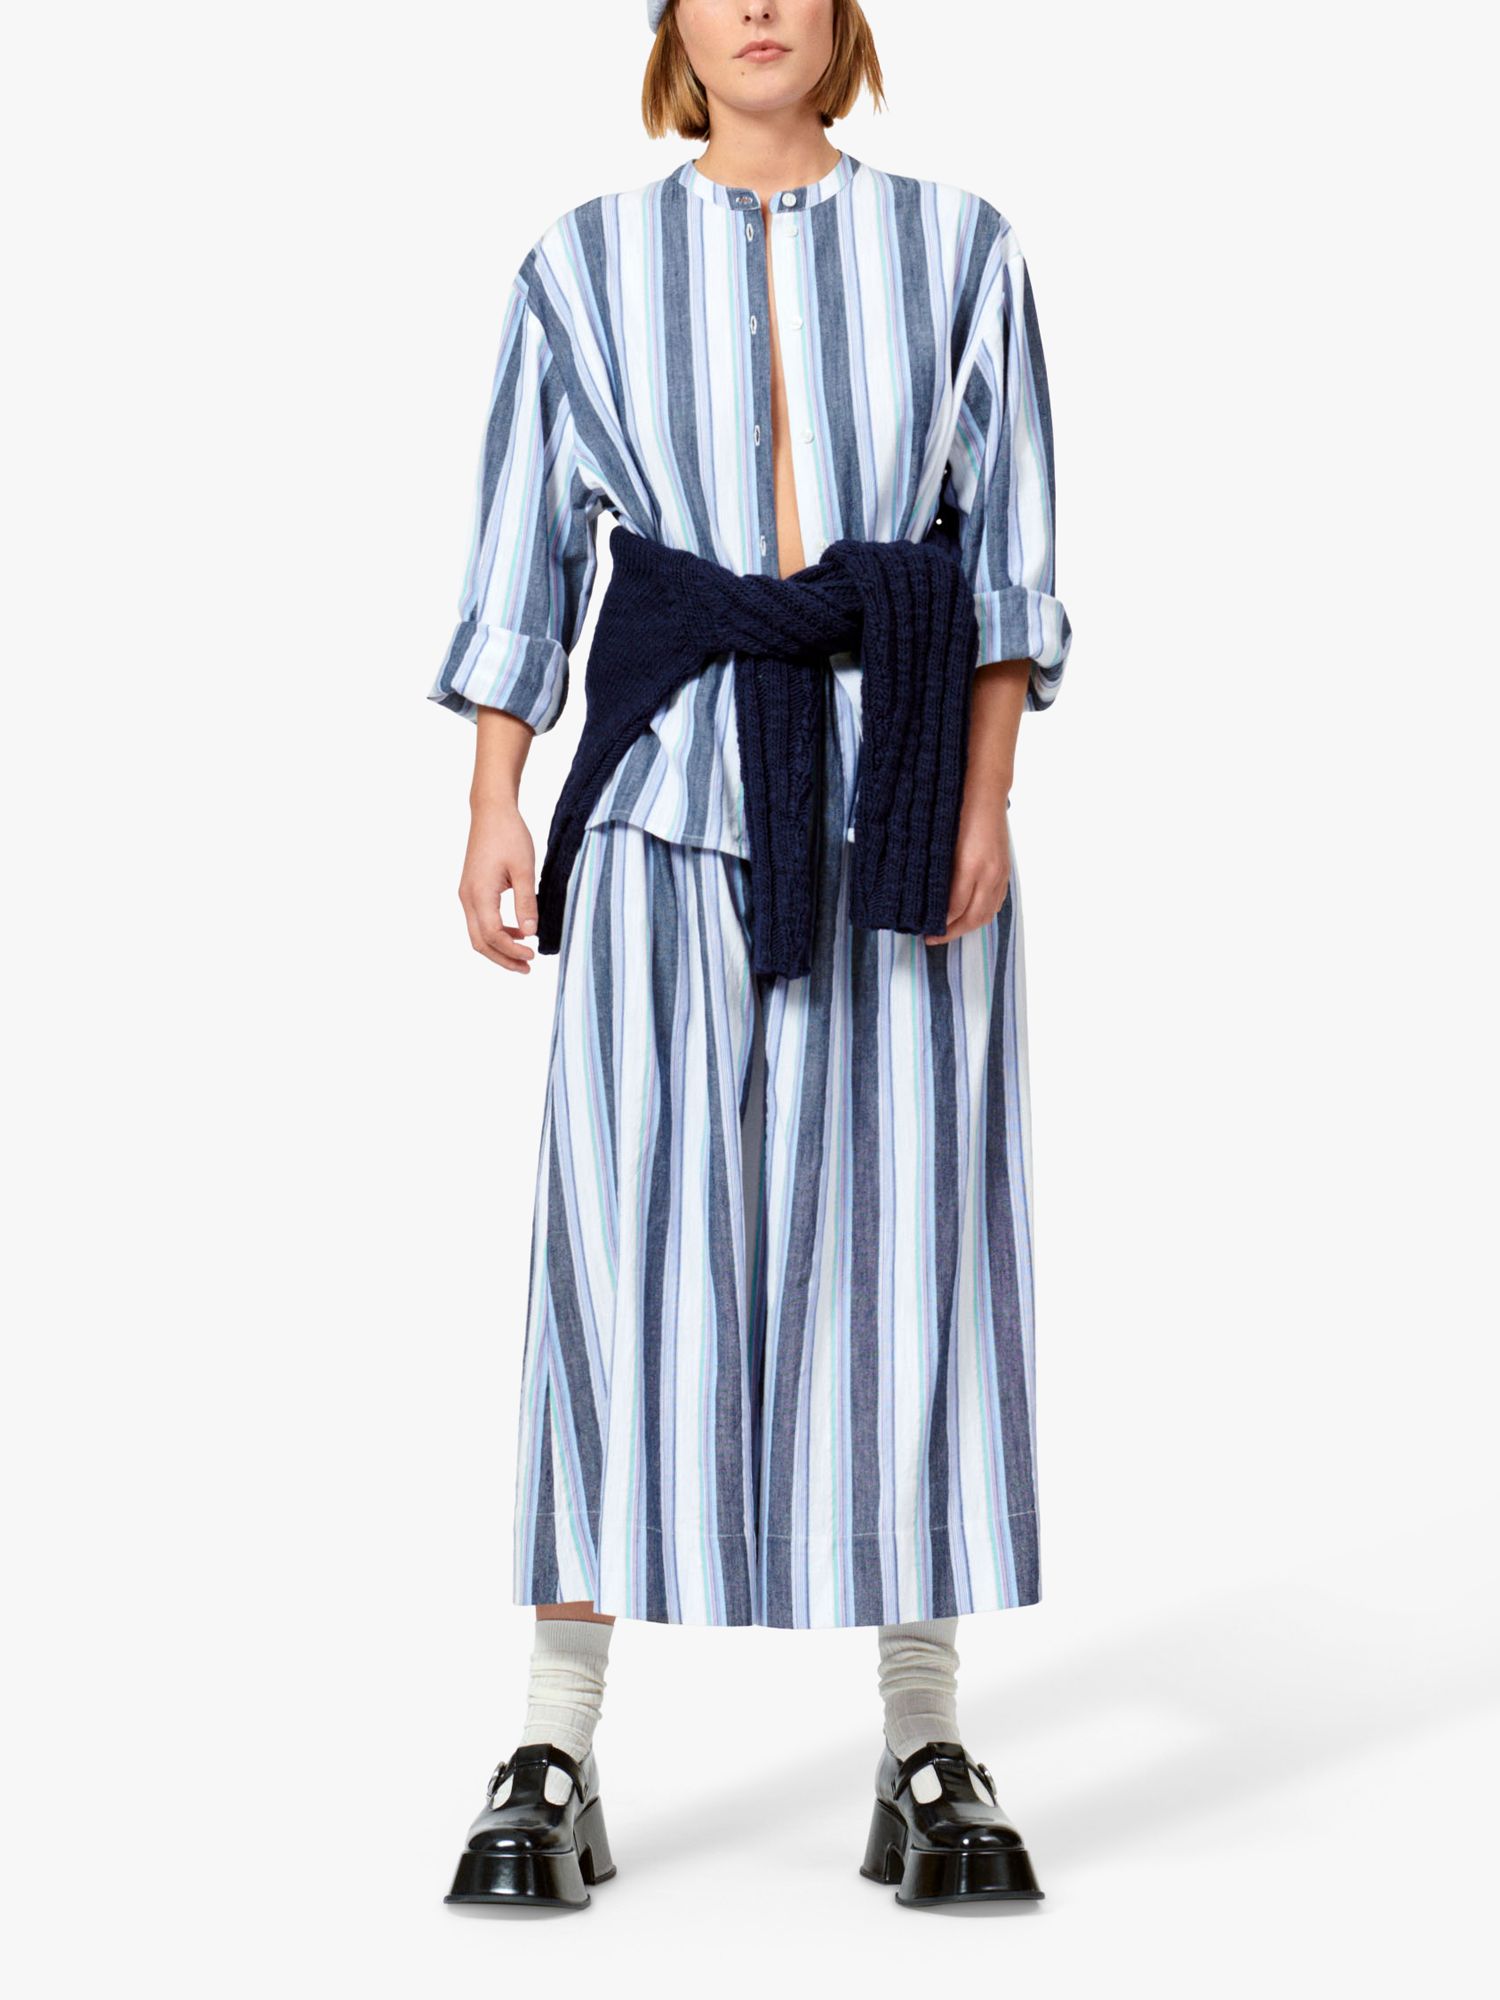 Buy nué notes Benjamin Striped Cotton Midi Skirt, Blue/Multi Online at johnlewis.com